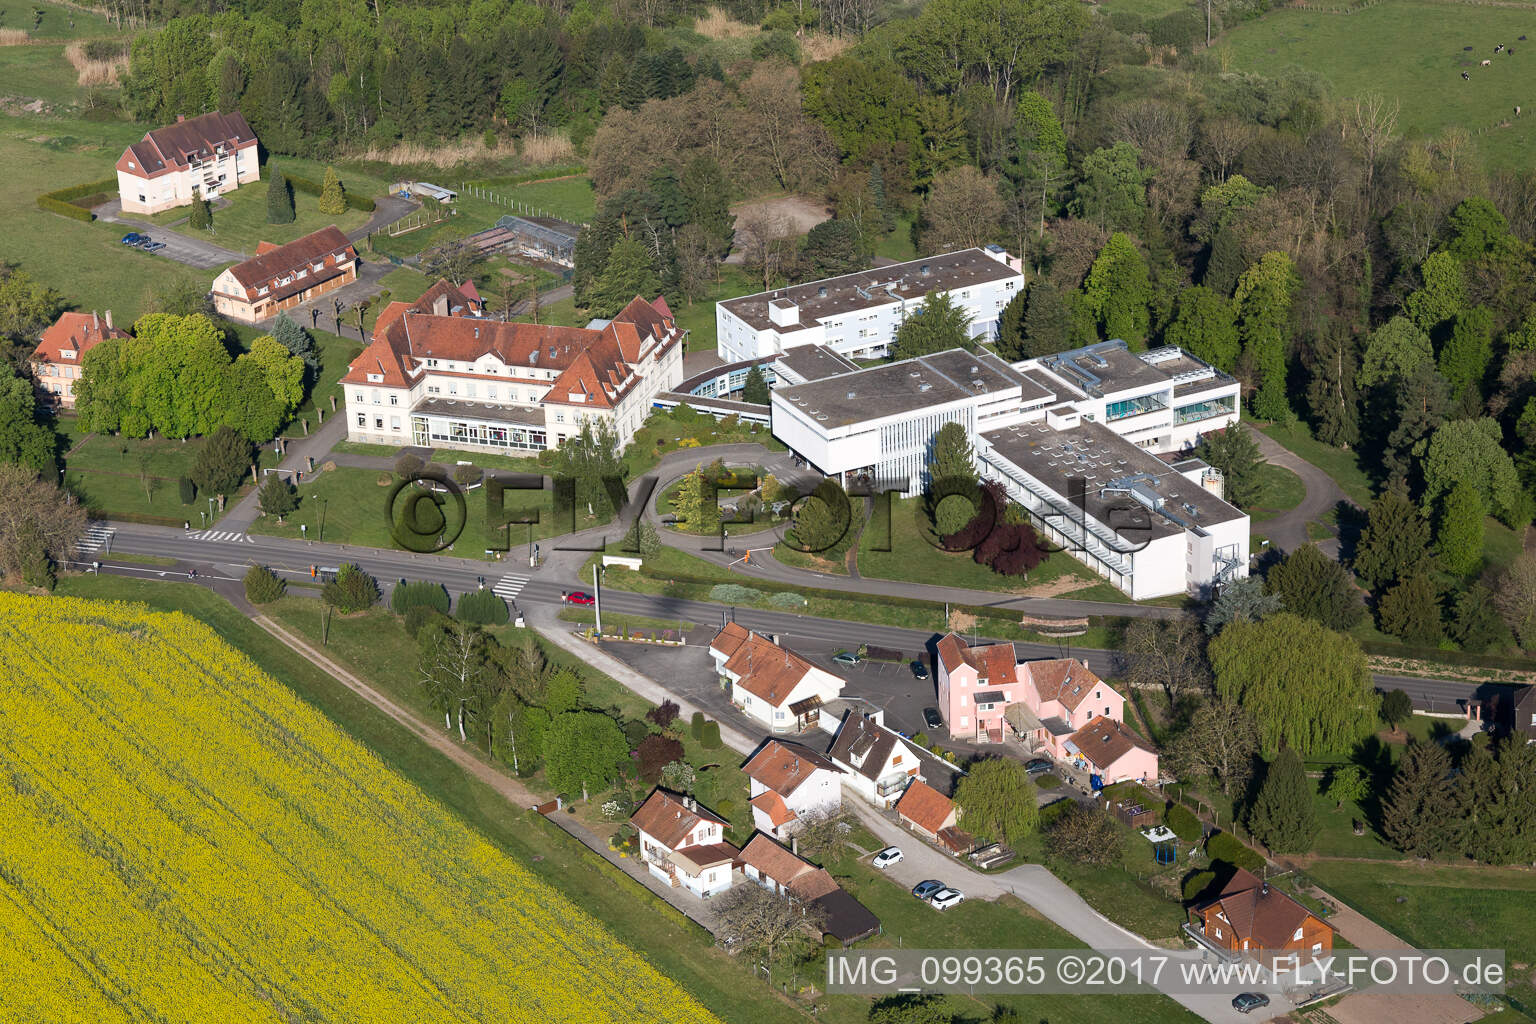 Luftbild von Thermen von Moosbronn in Morsbronn-les-Bains im Bundesland Bas-Rhin, Frankreich